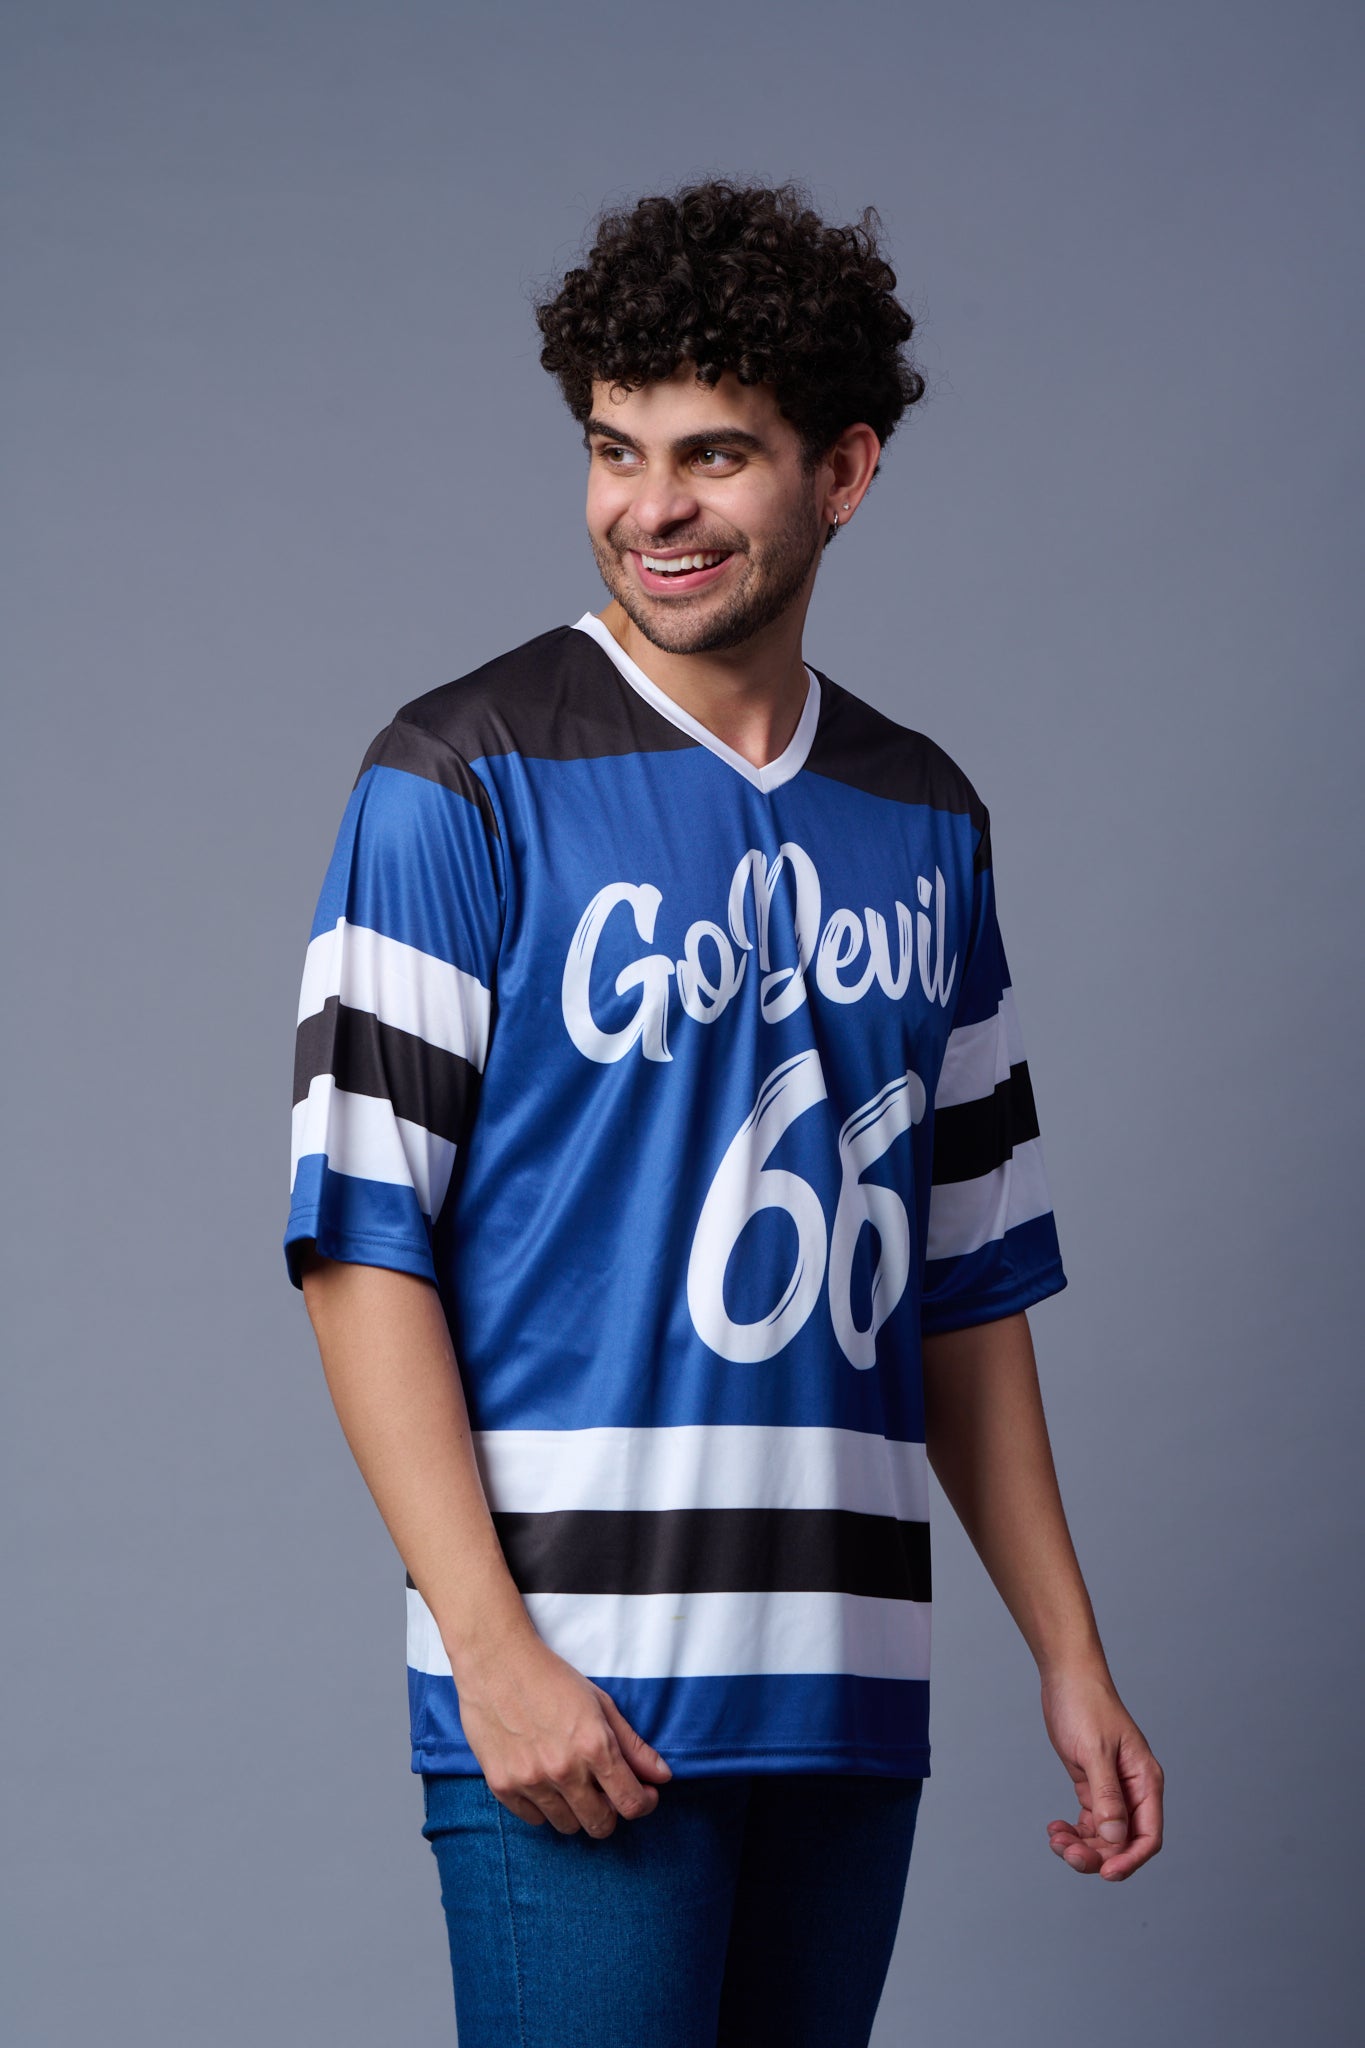 Go Devil 66 Striped (In White) Printed Blue Jersey Oversized T-Shirt for Men